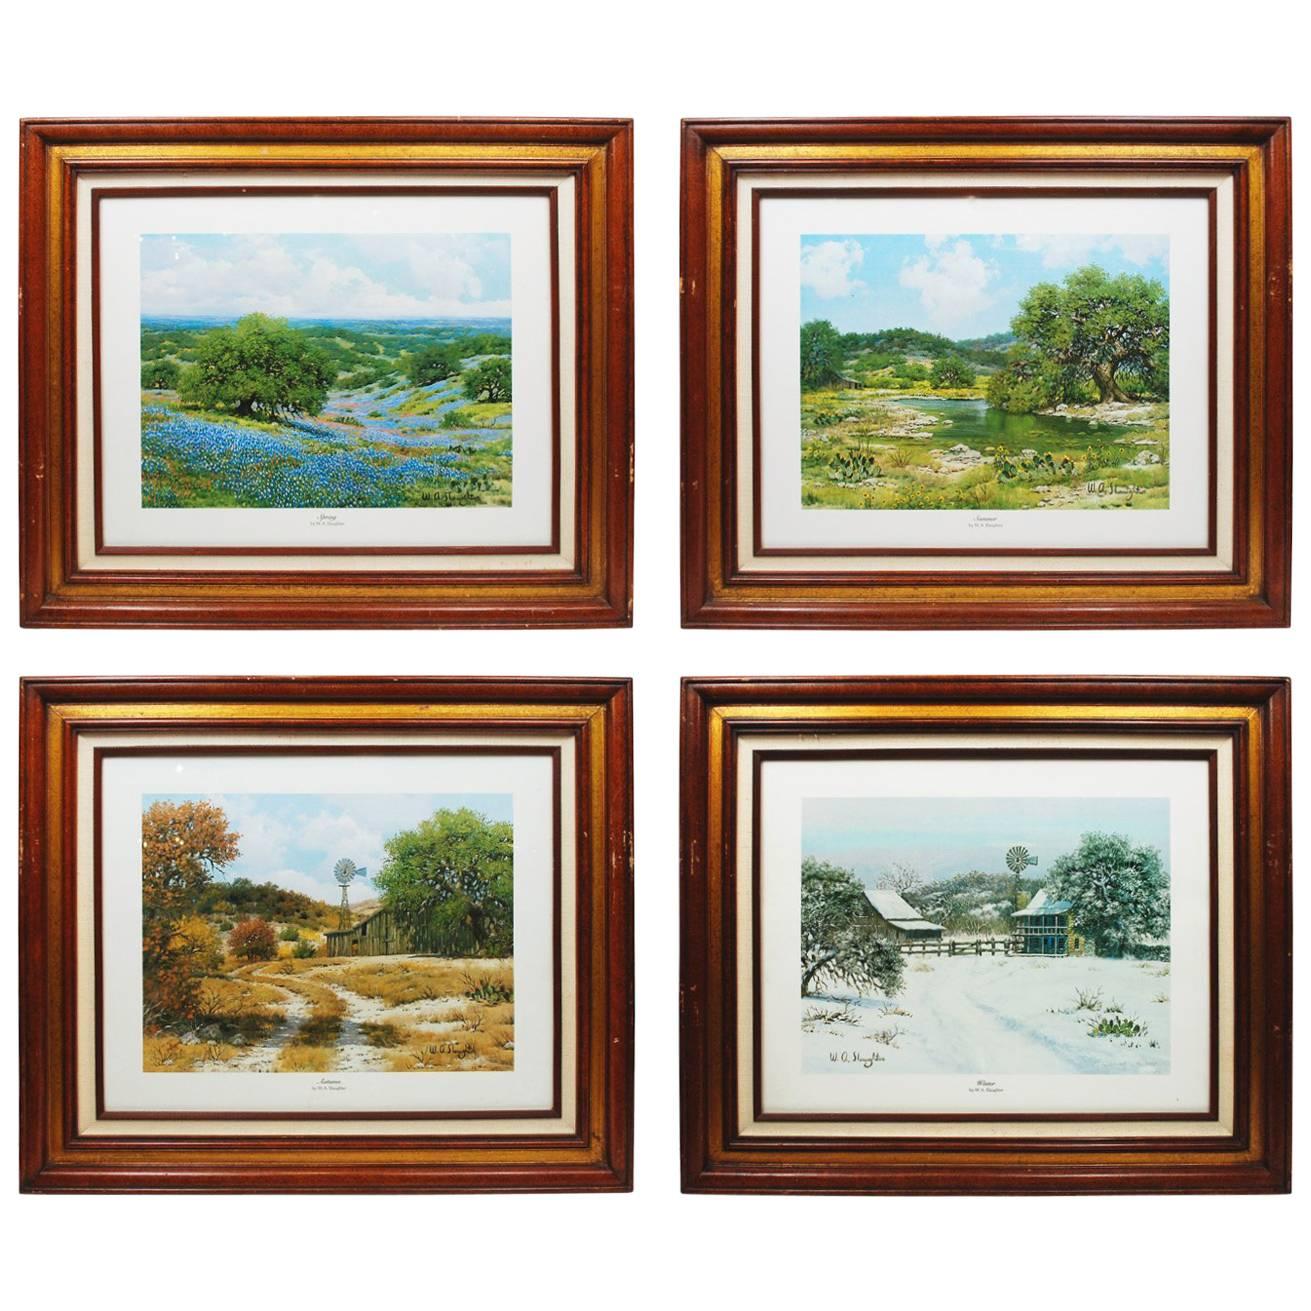 Vintage Set of Four Landscape Prints of Texas Seasons Bluebonnets, Slaughter